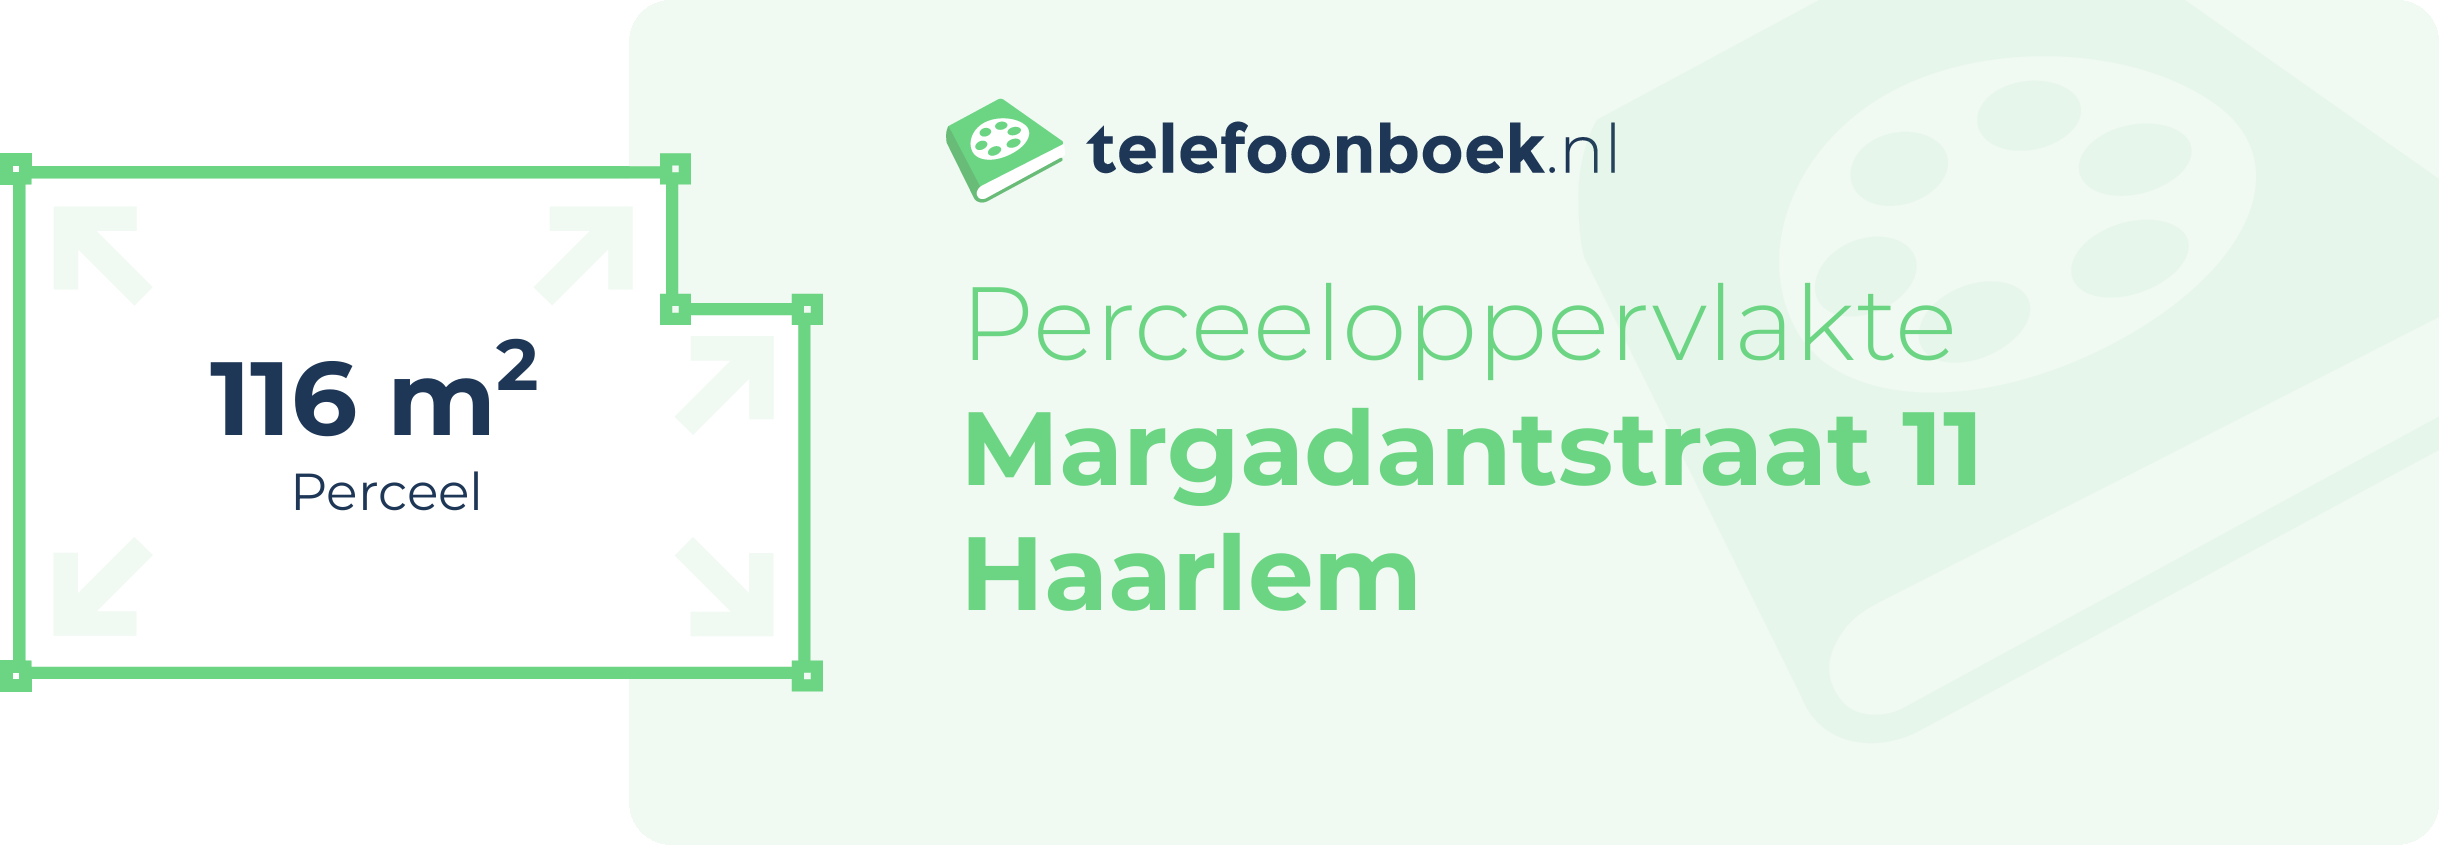 Perceeloppervlakte Margadantstraat 11 Haarlem